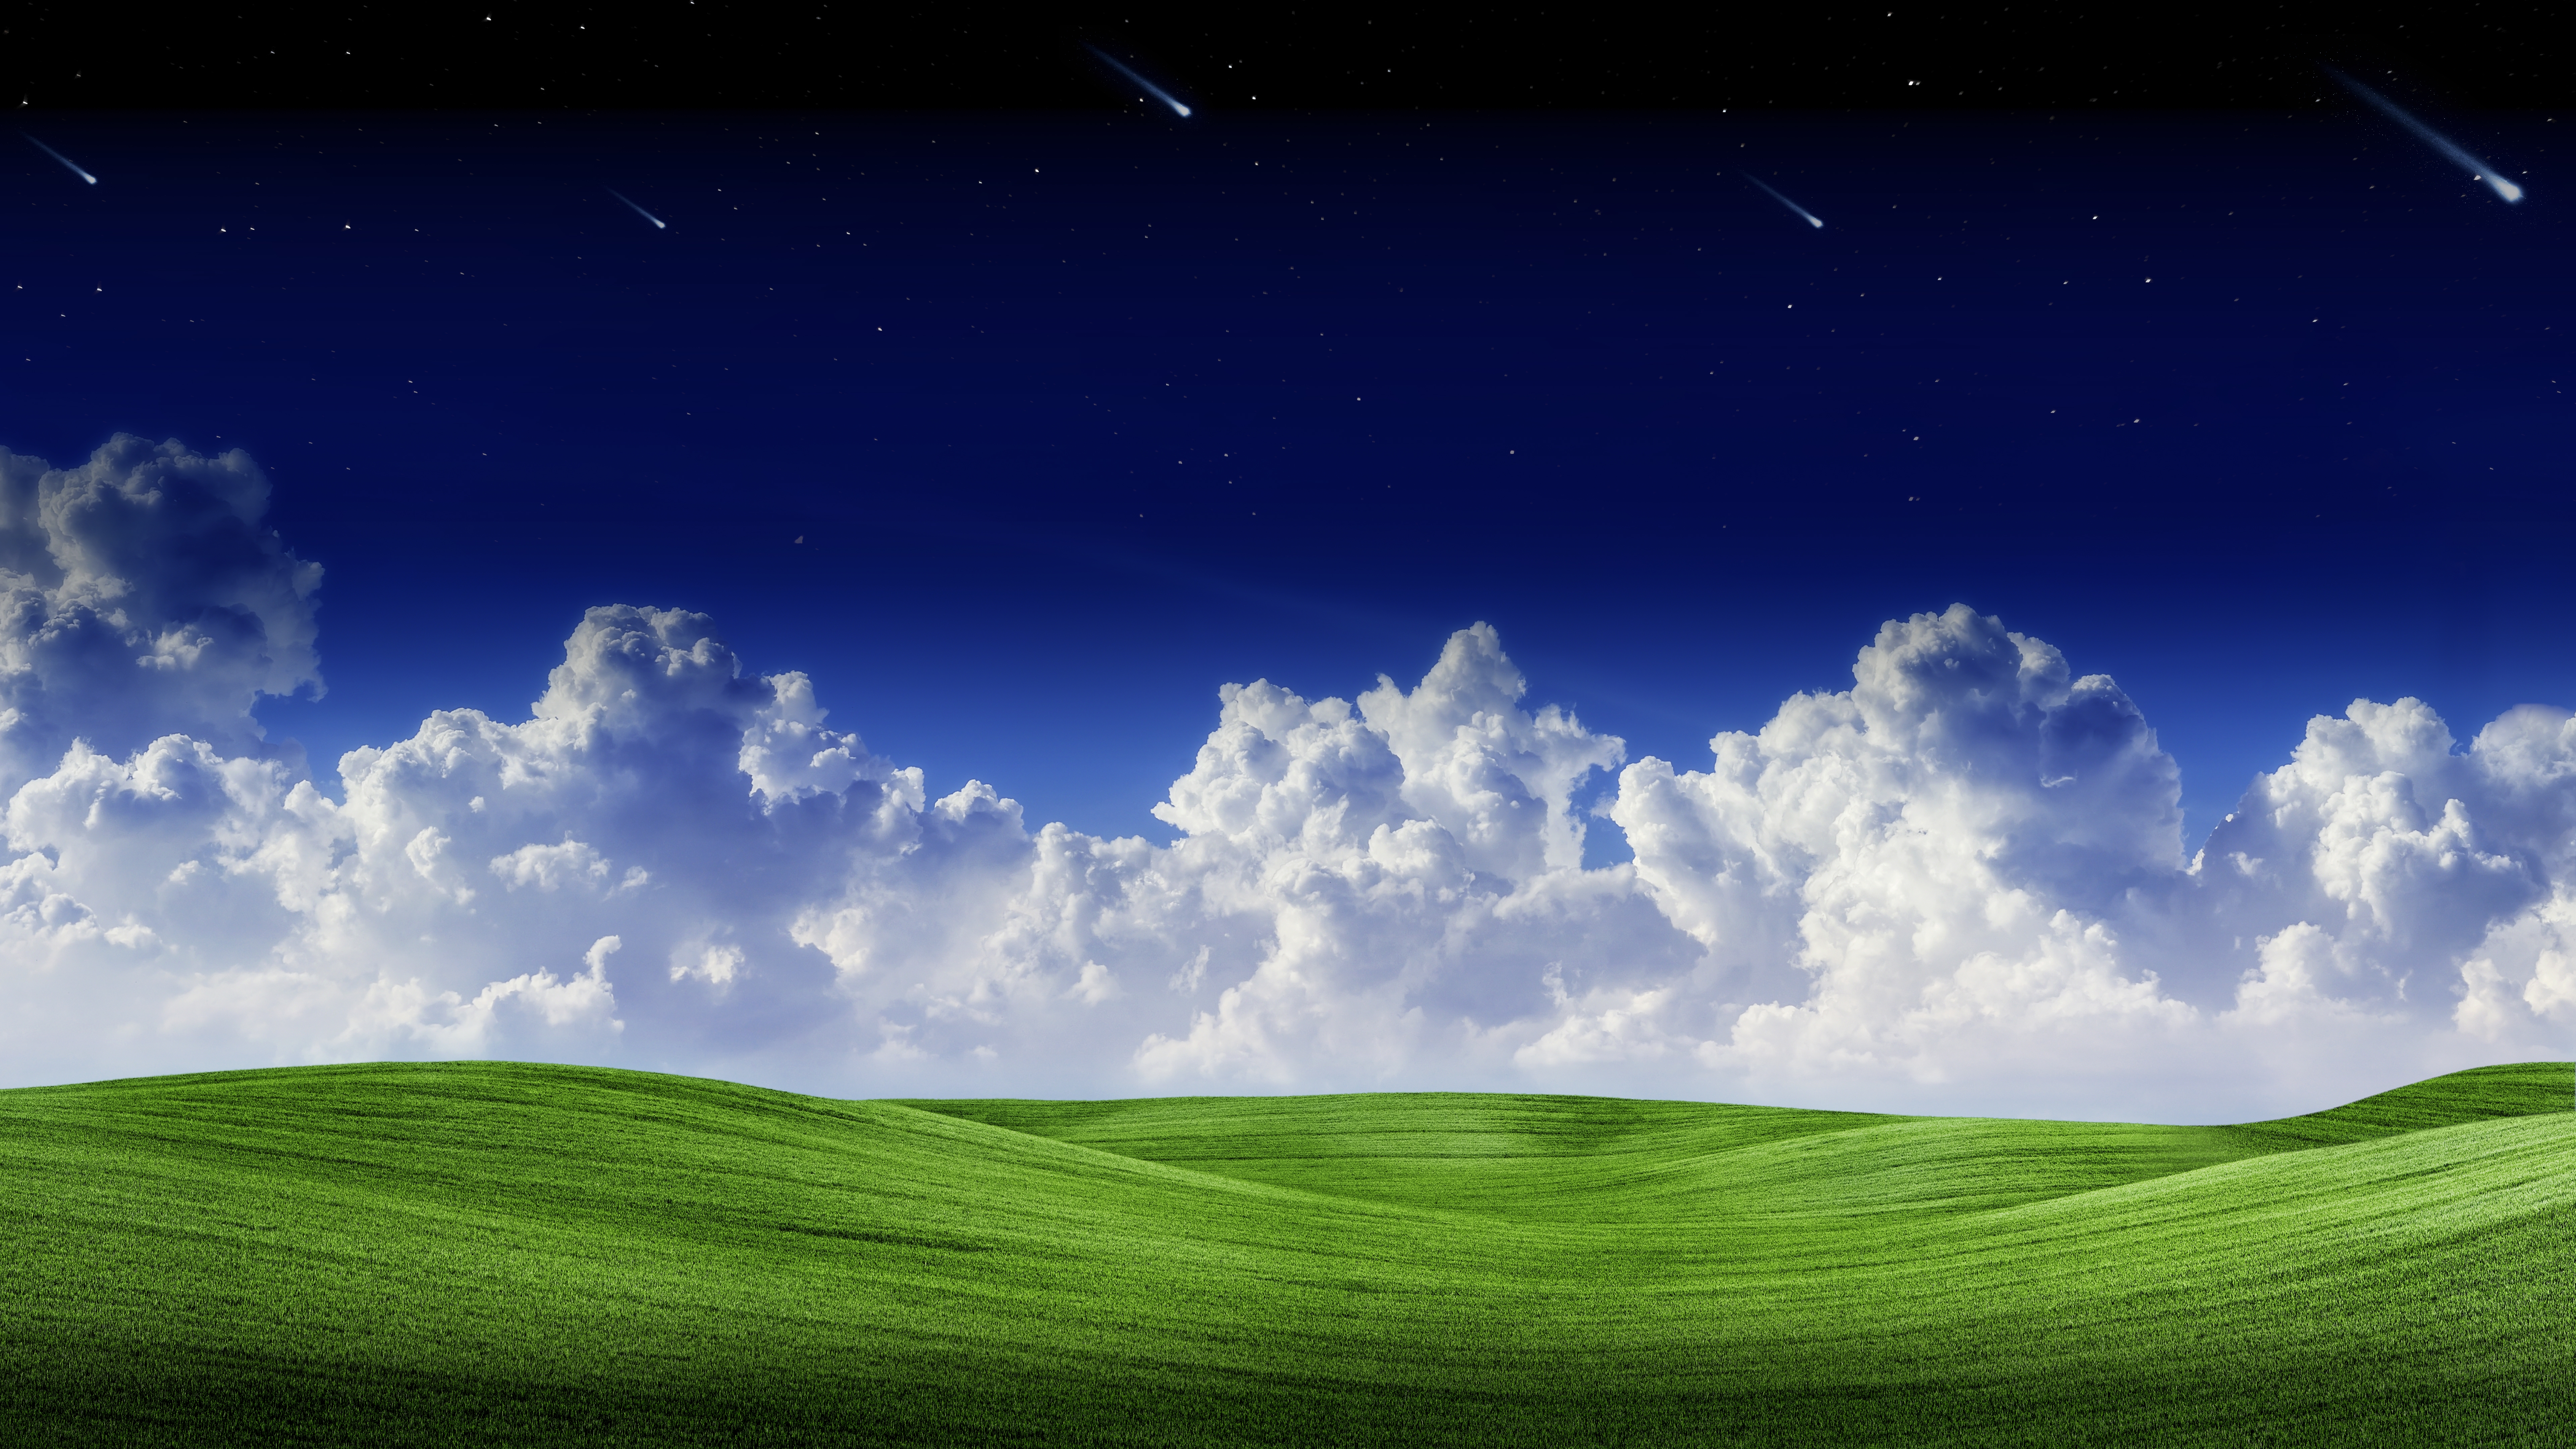 HD wallpaper, Clouds, 5K, Blue Sky, 8K, Green Grass, Starry Sky, Scenery, Falling Stars, Summer, Landscape, Scenic, Panorama